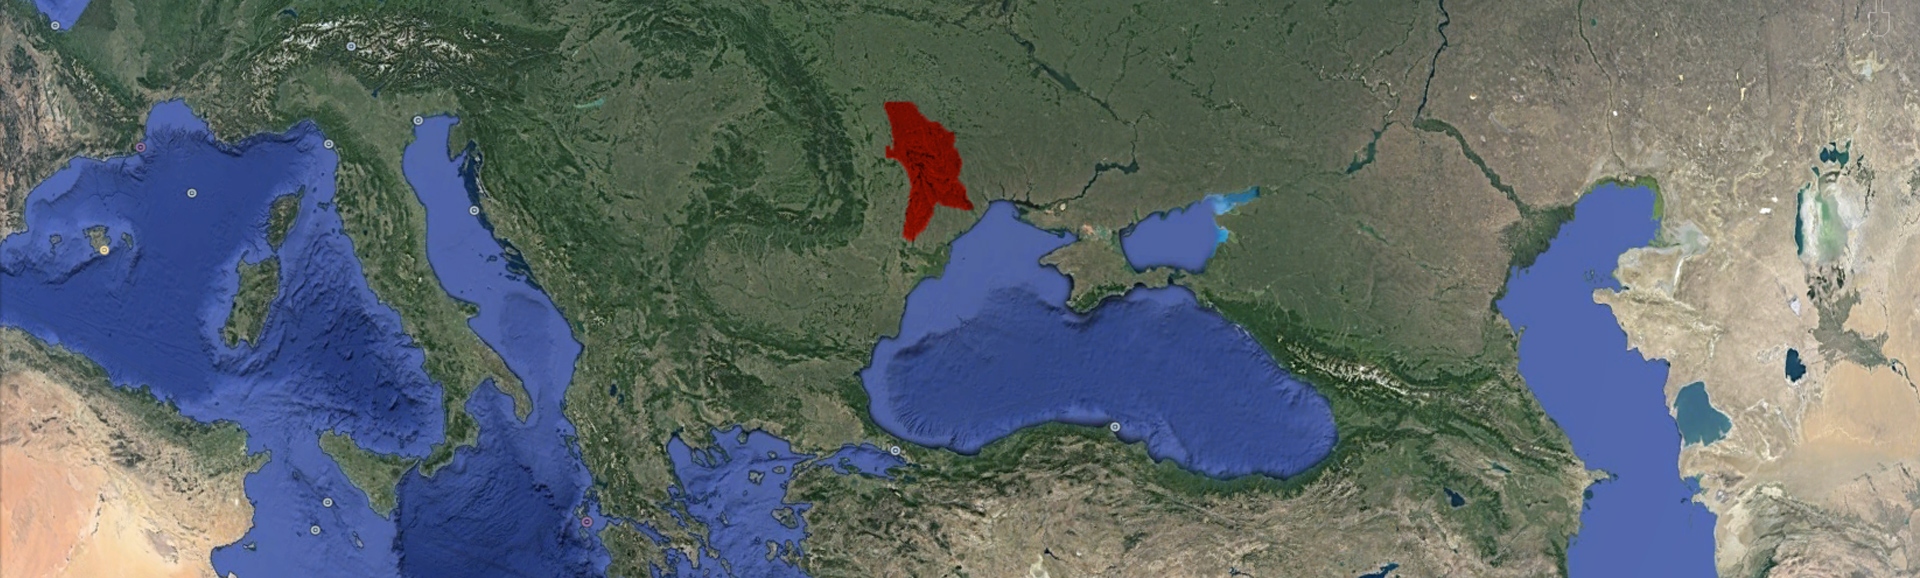 Expansion into <br>
Moldova